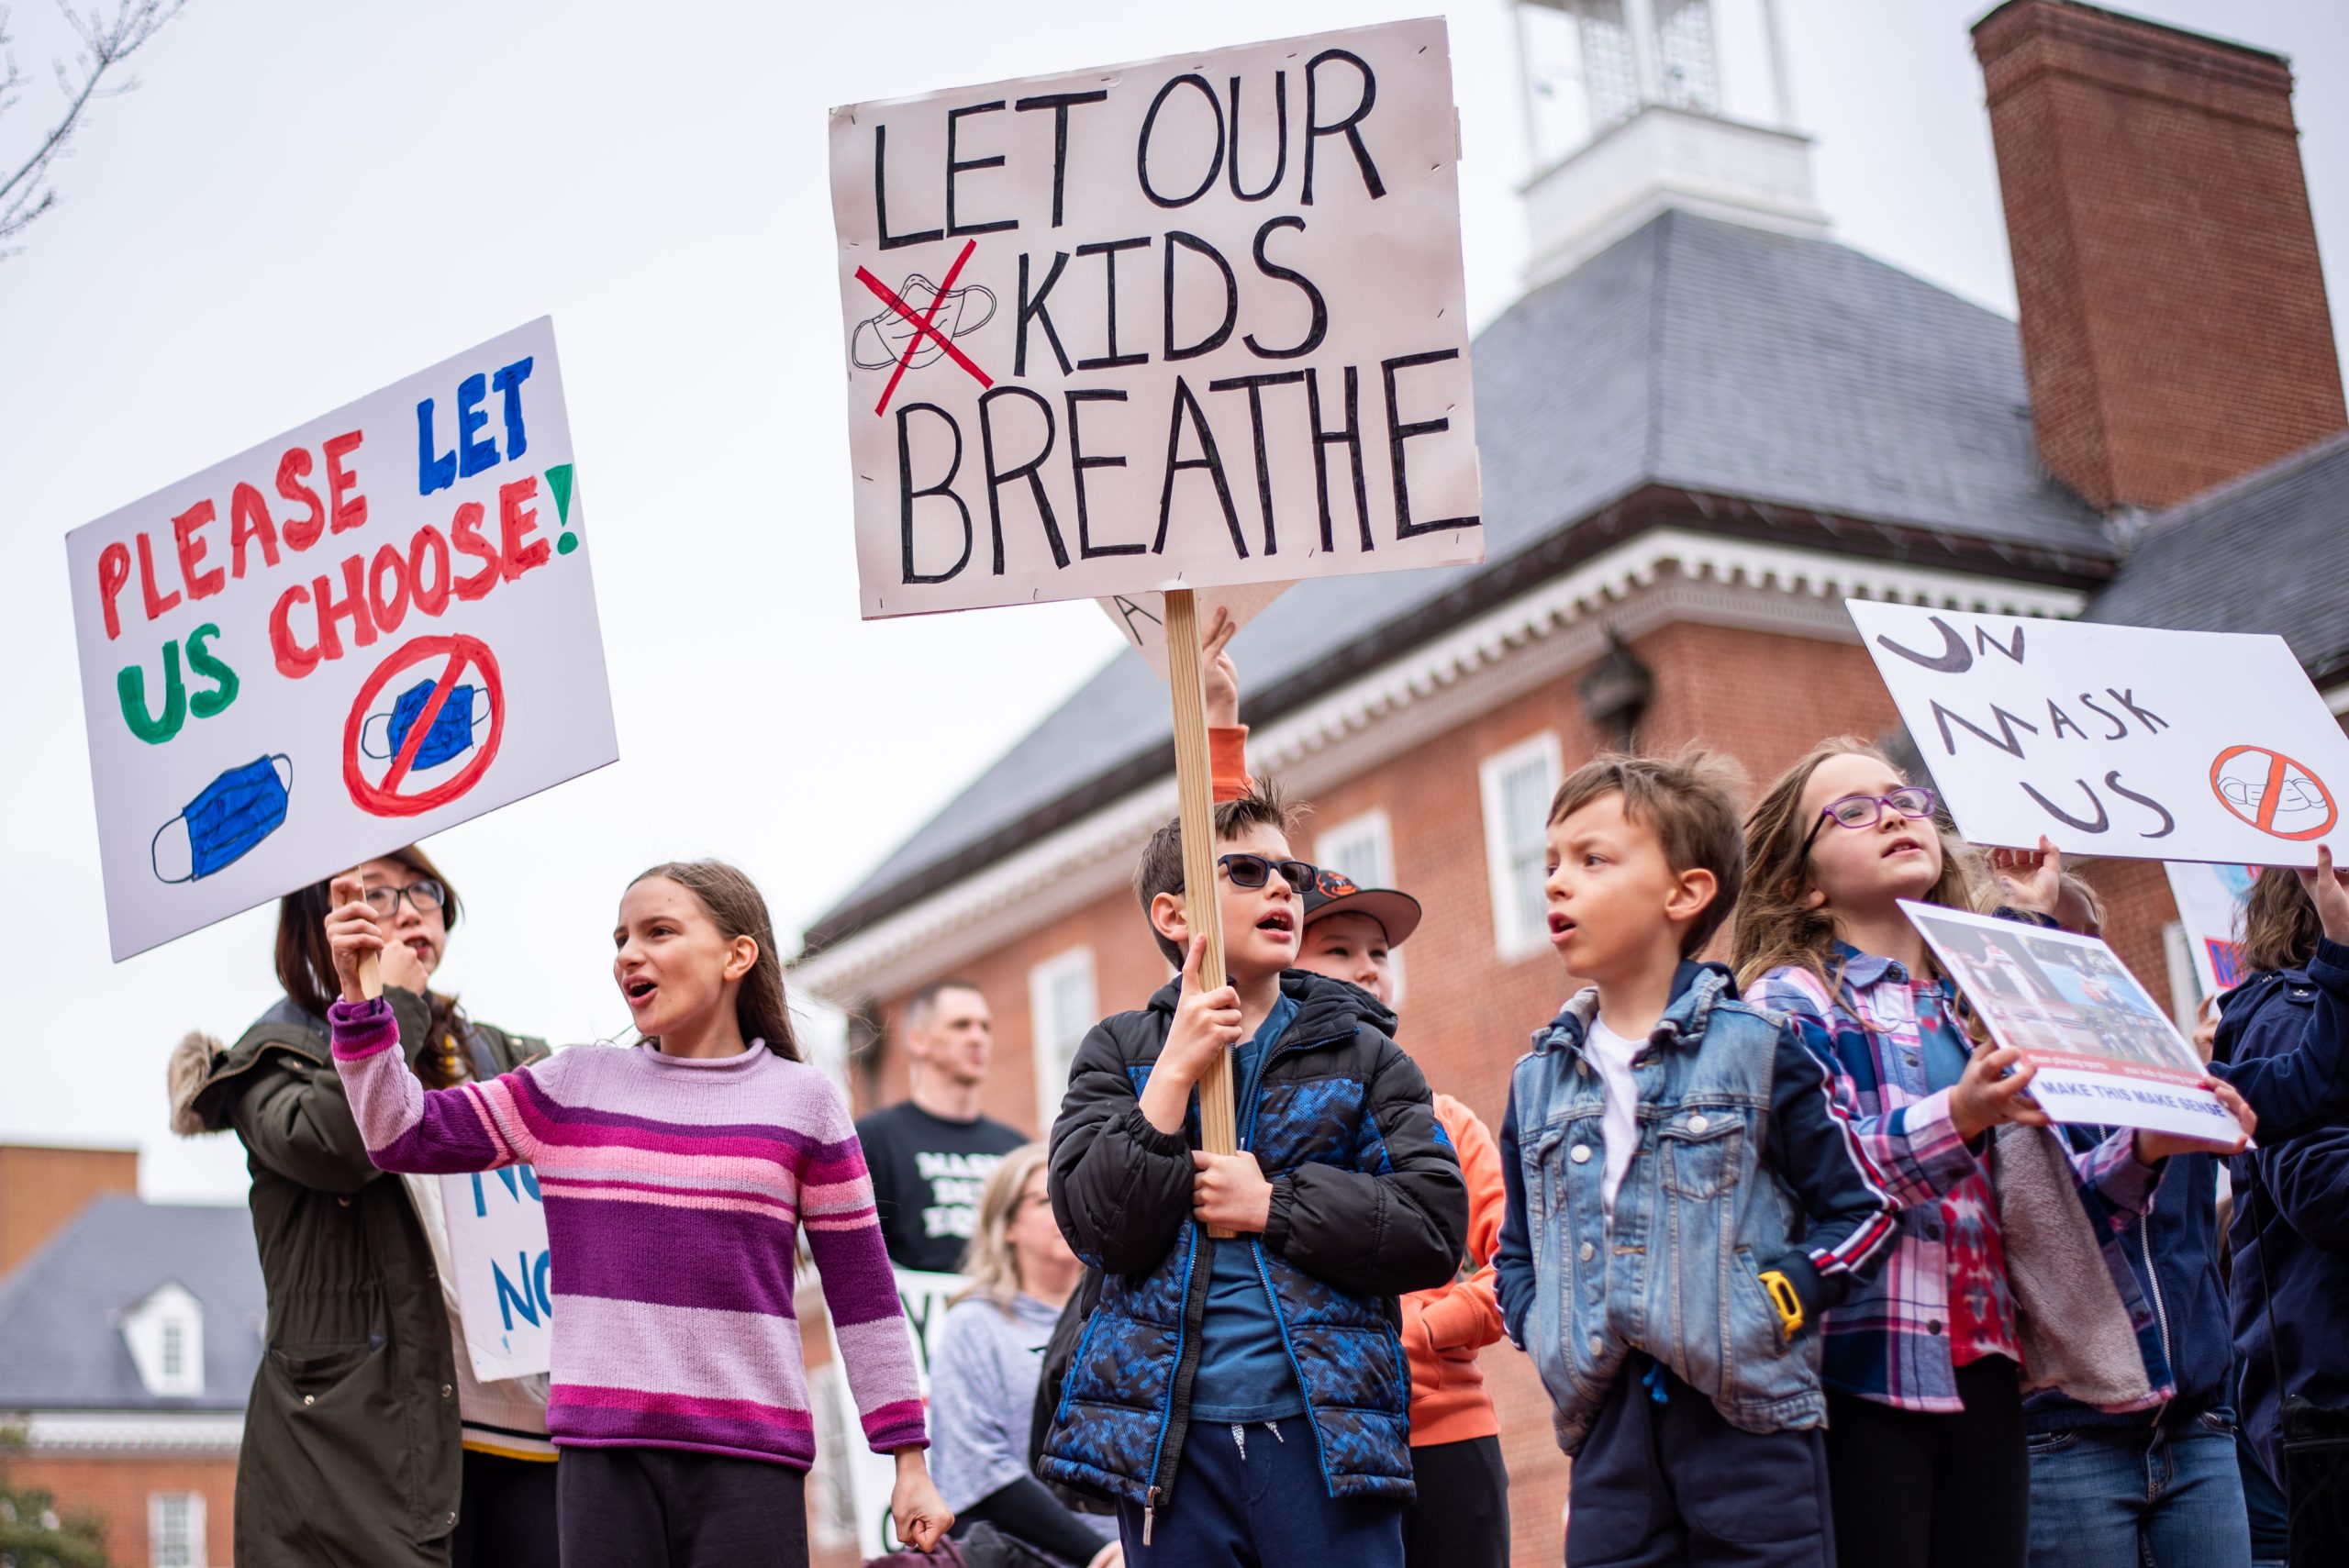 "Let our kids breathe"